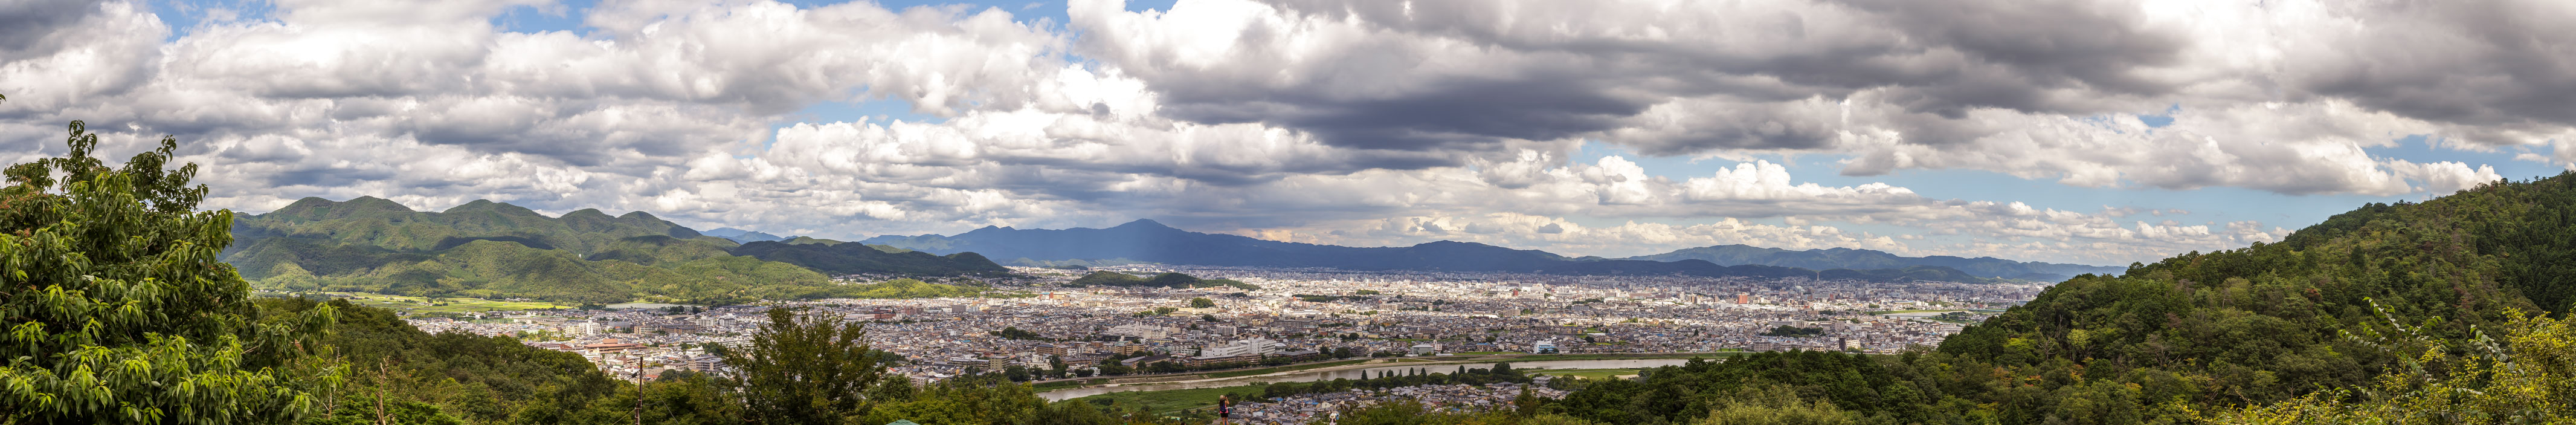 /Guewen/galeries/public/Voyages/Japon/kyoto/vista/Kyoto-vista_013.jpg